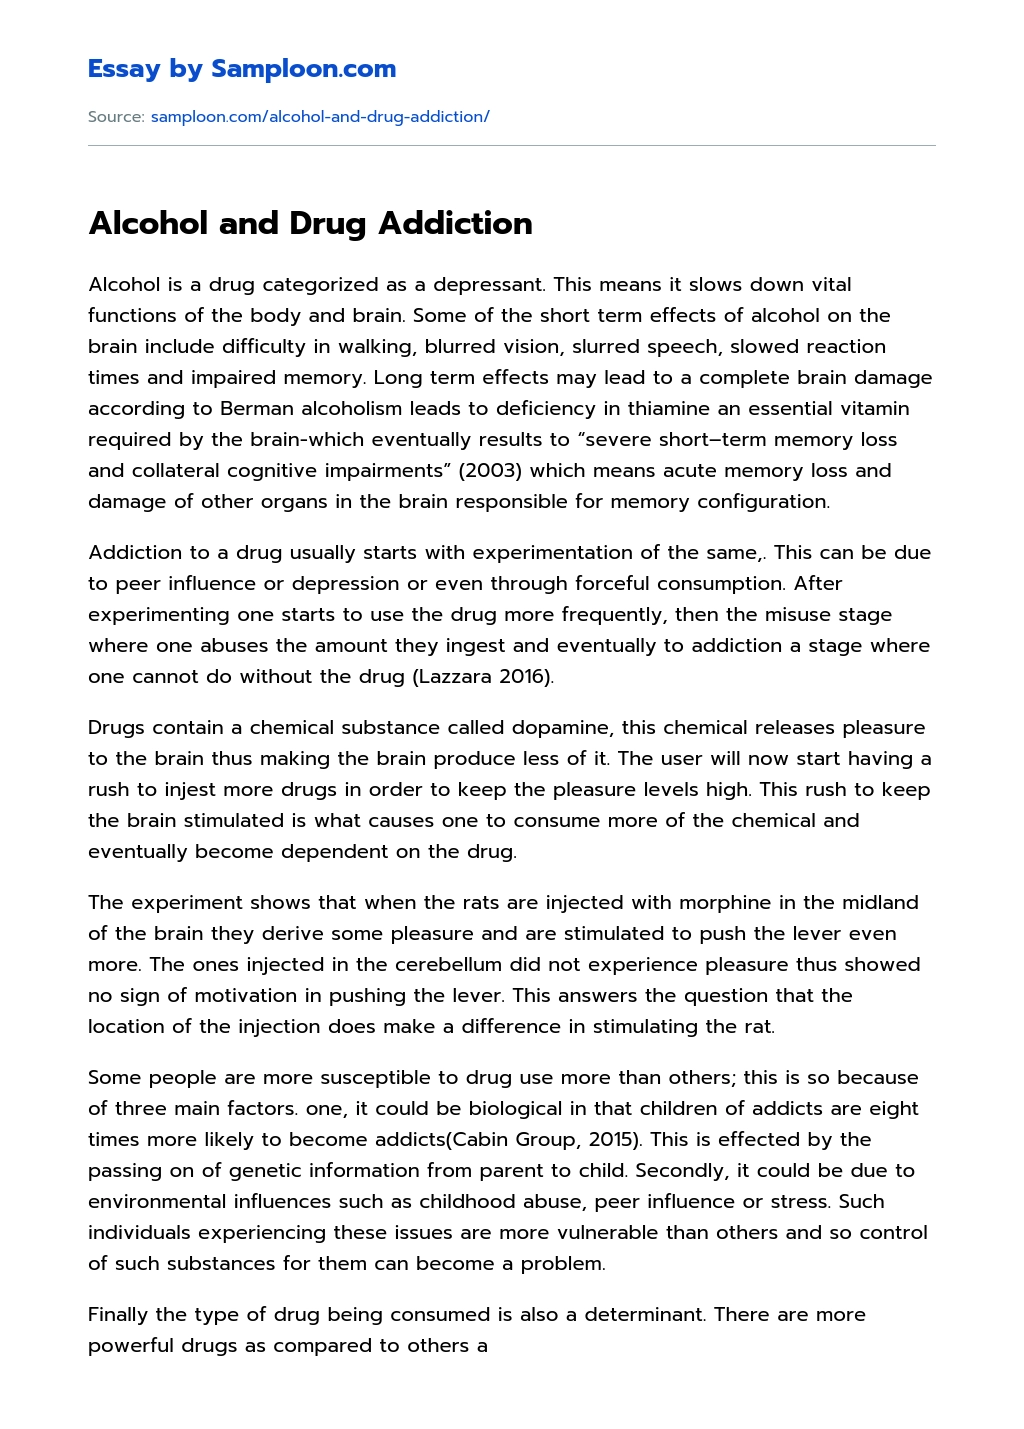 Alcohol and Drug Addiction essay